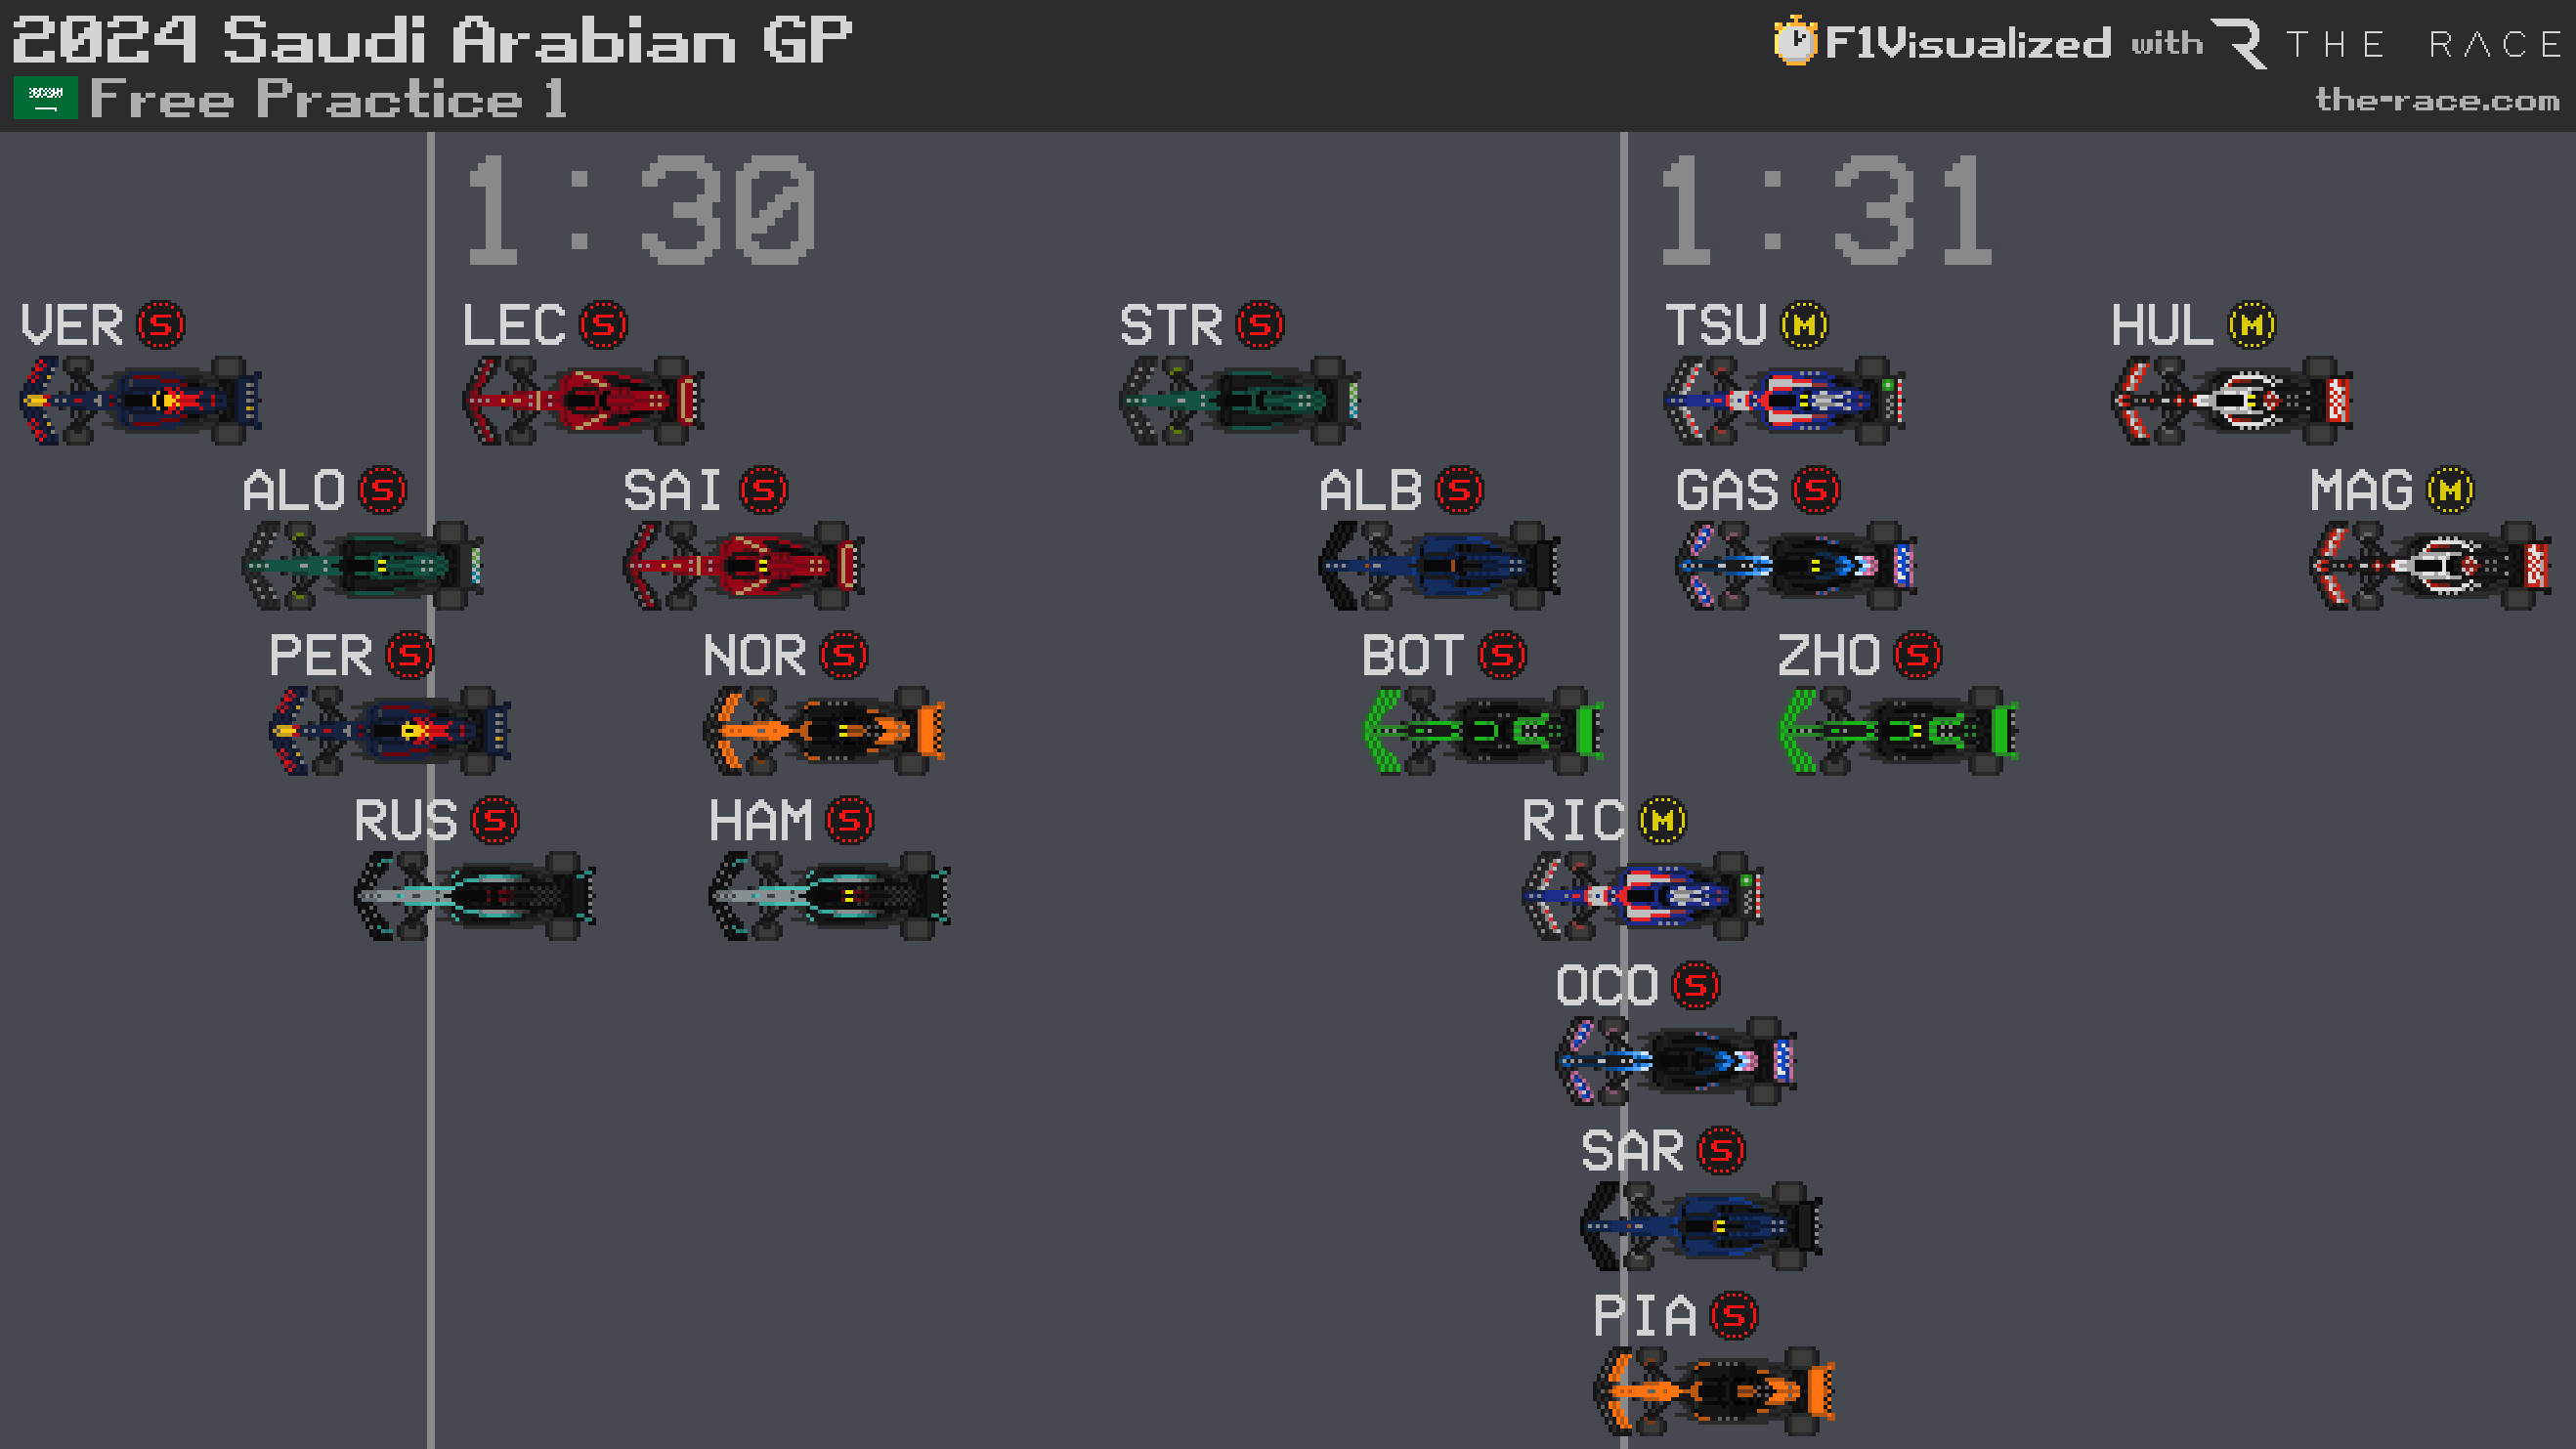 Saudi GP FP1 results